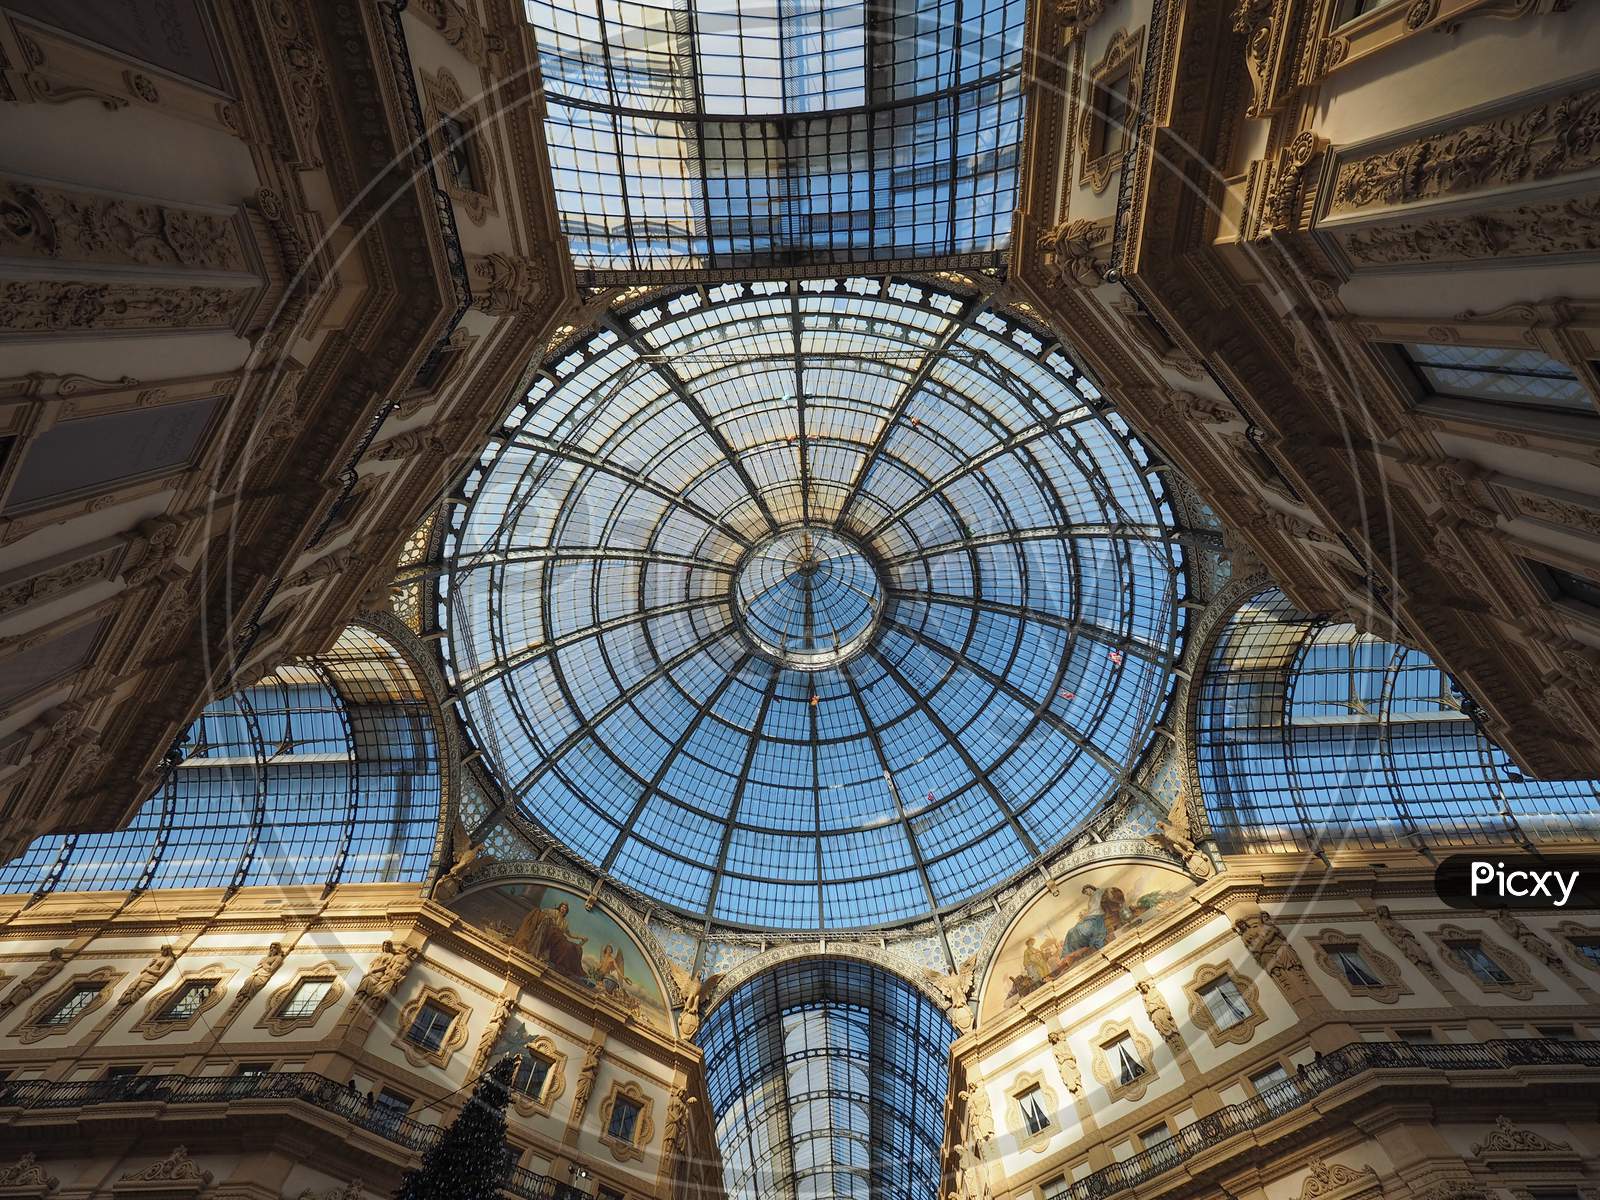 Glass Roof Of Galleria Vittorio Emanuele Ii Arcade In Milan